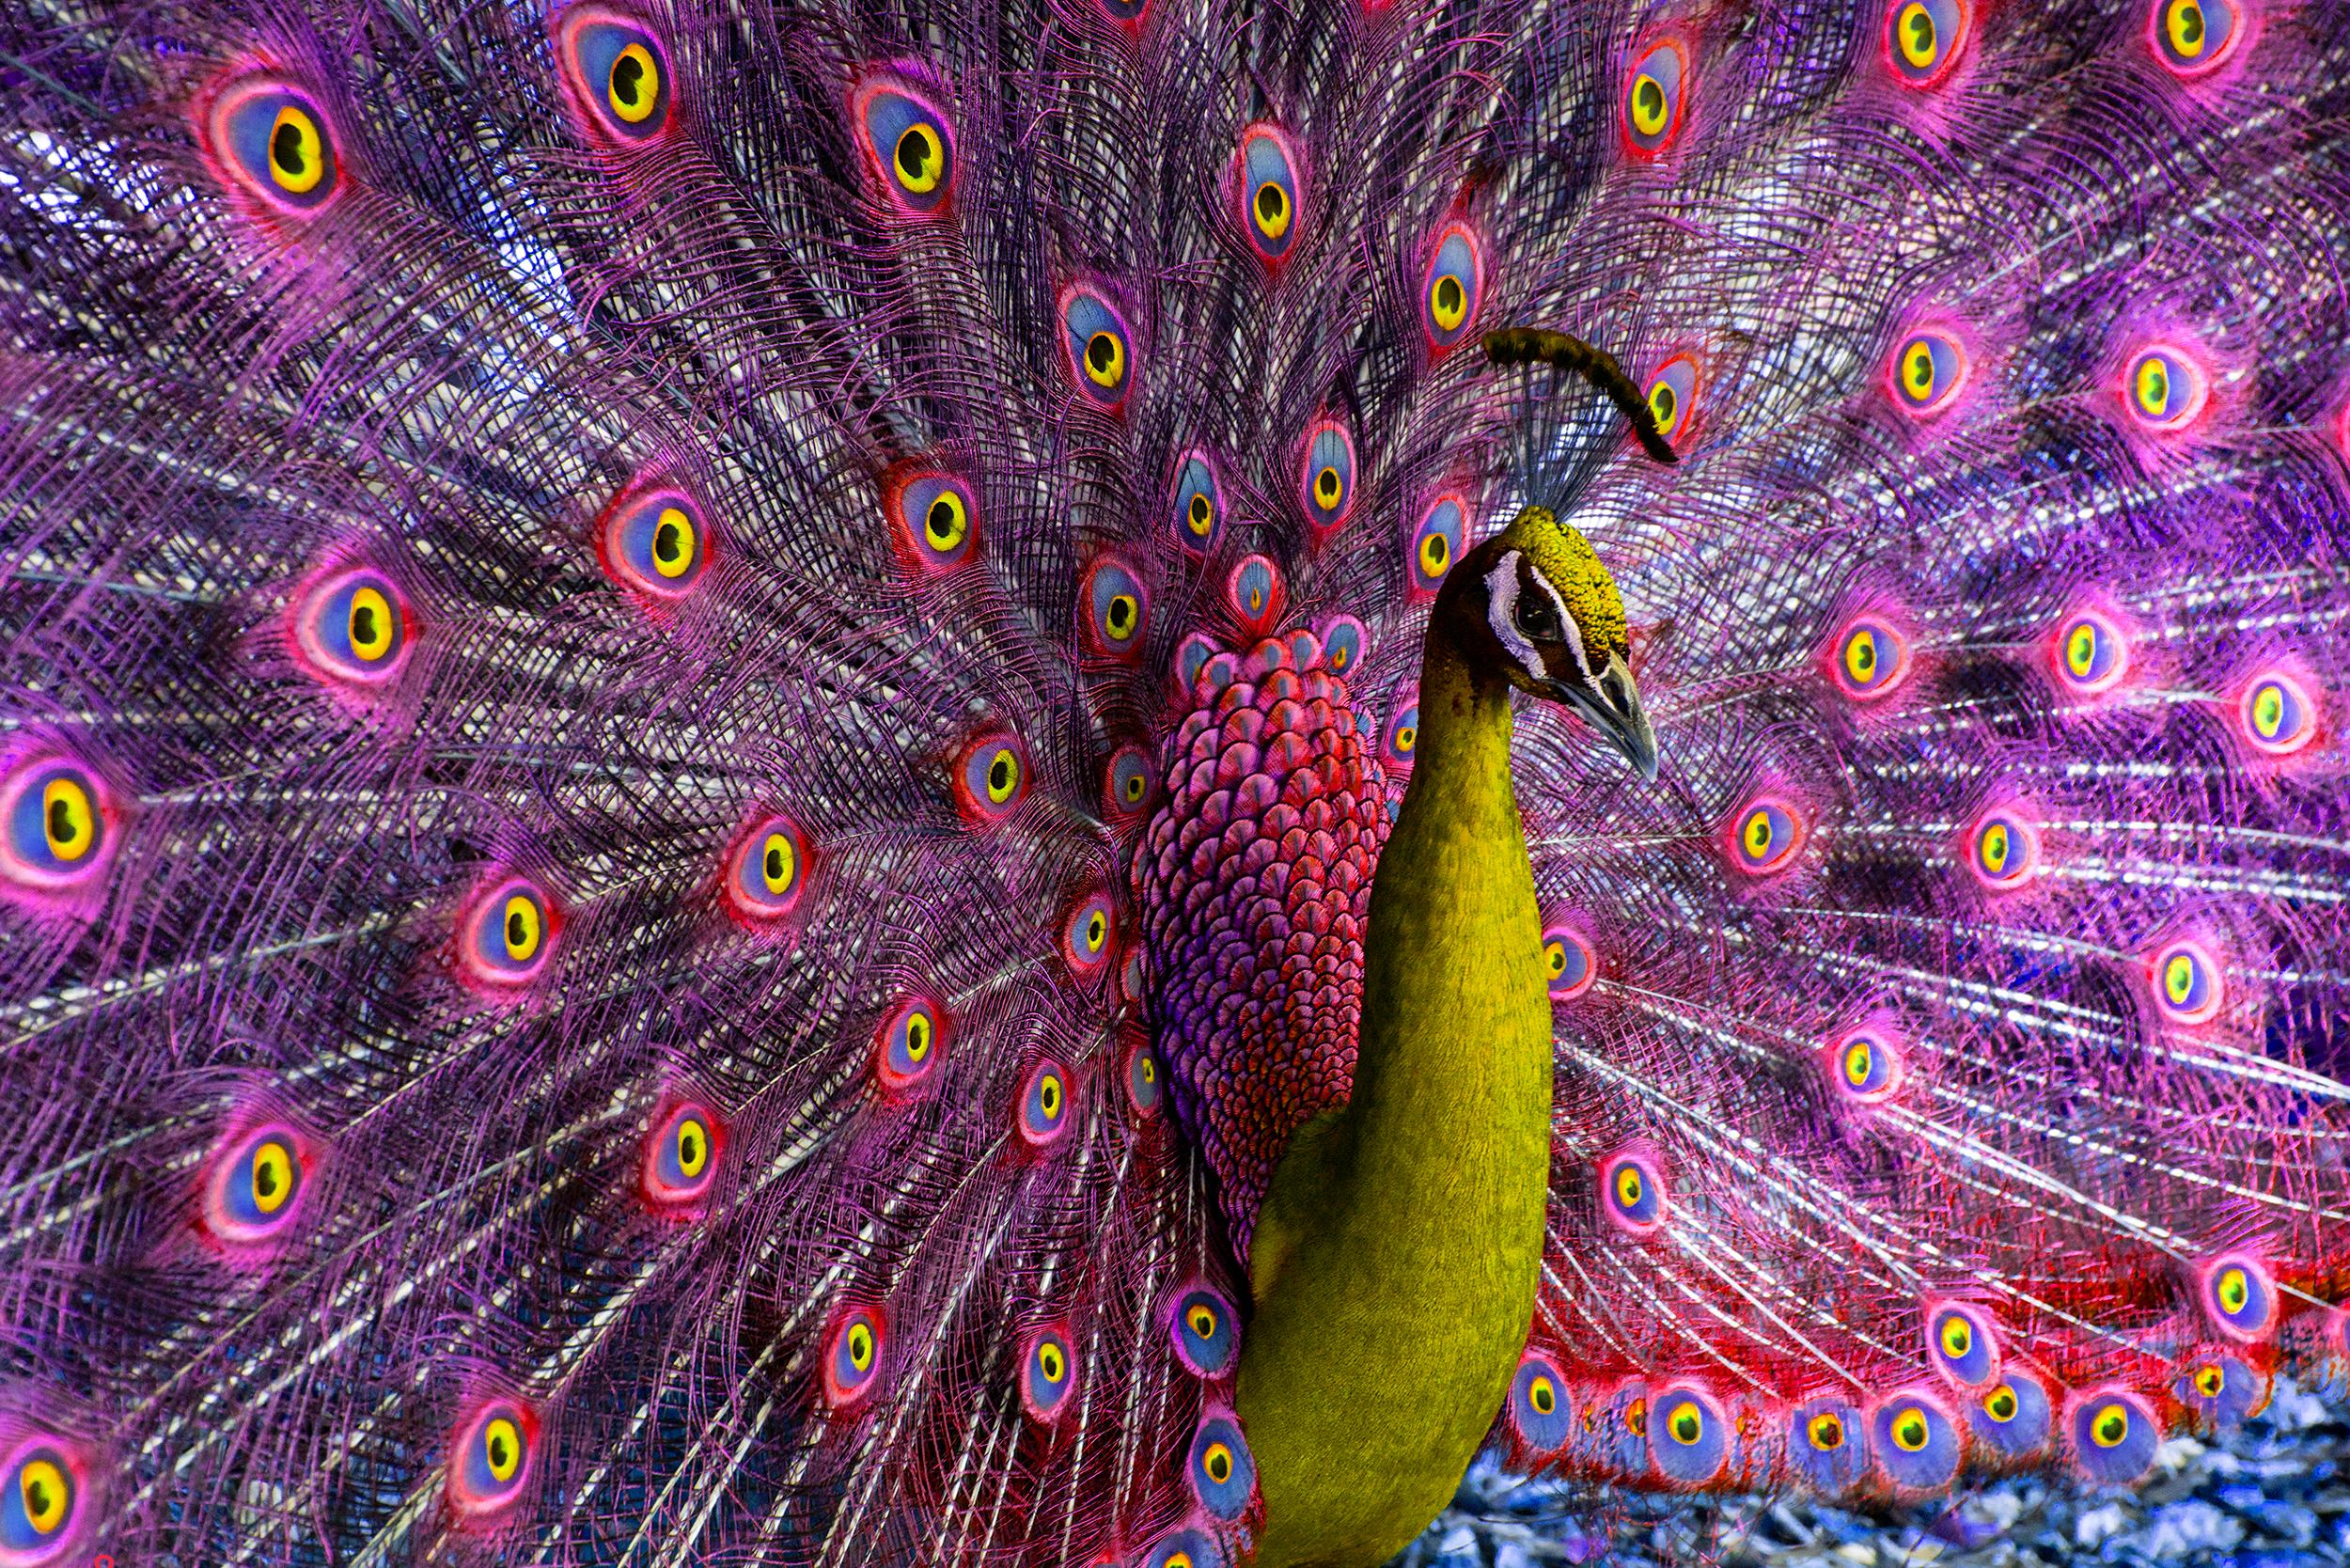 Robert Funk Figurative Photograph - Peacock displaying in Magenta and Yellow Birds